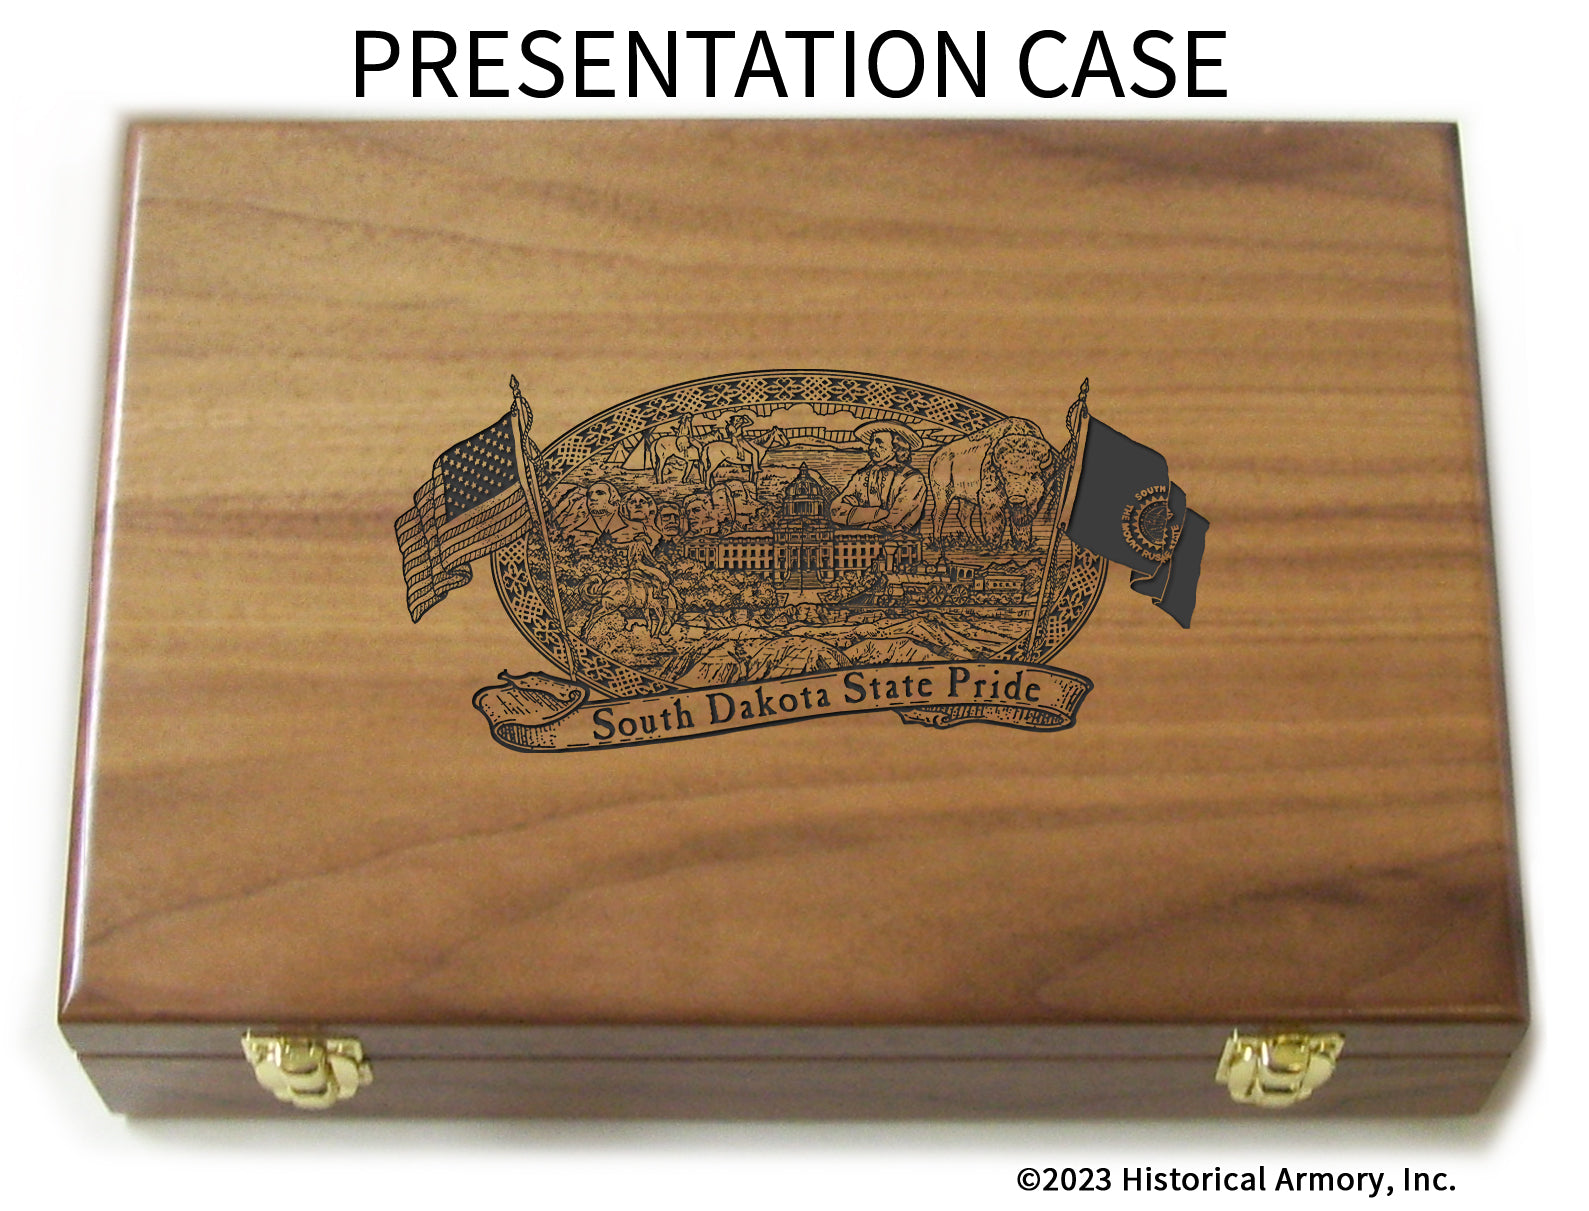 South Dakota State Pride Limited Edition Engraved 1911 Presentation Case